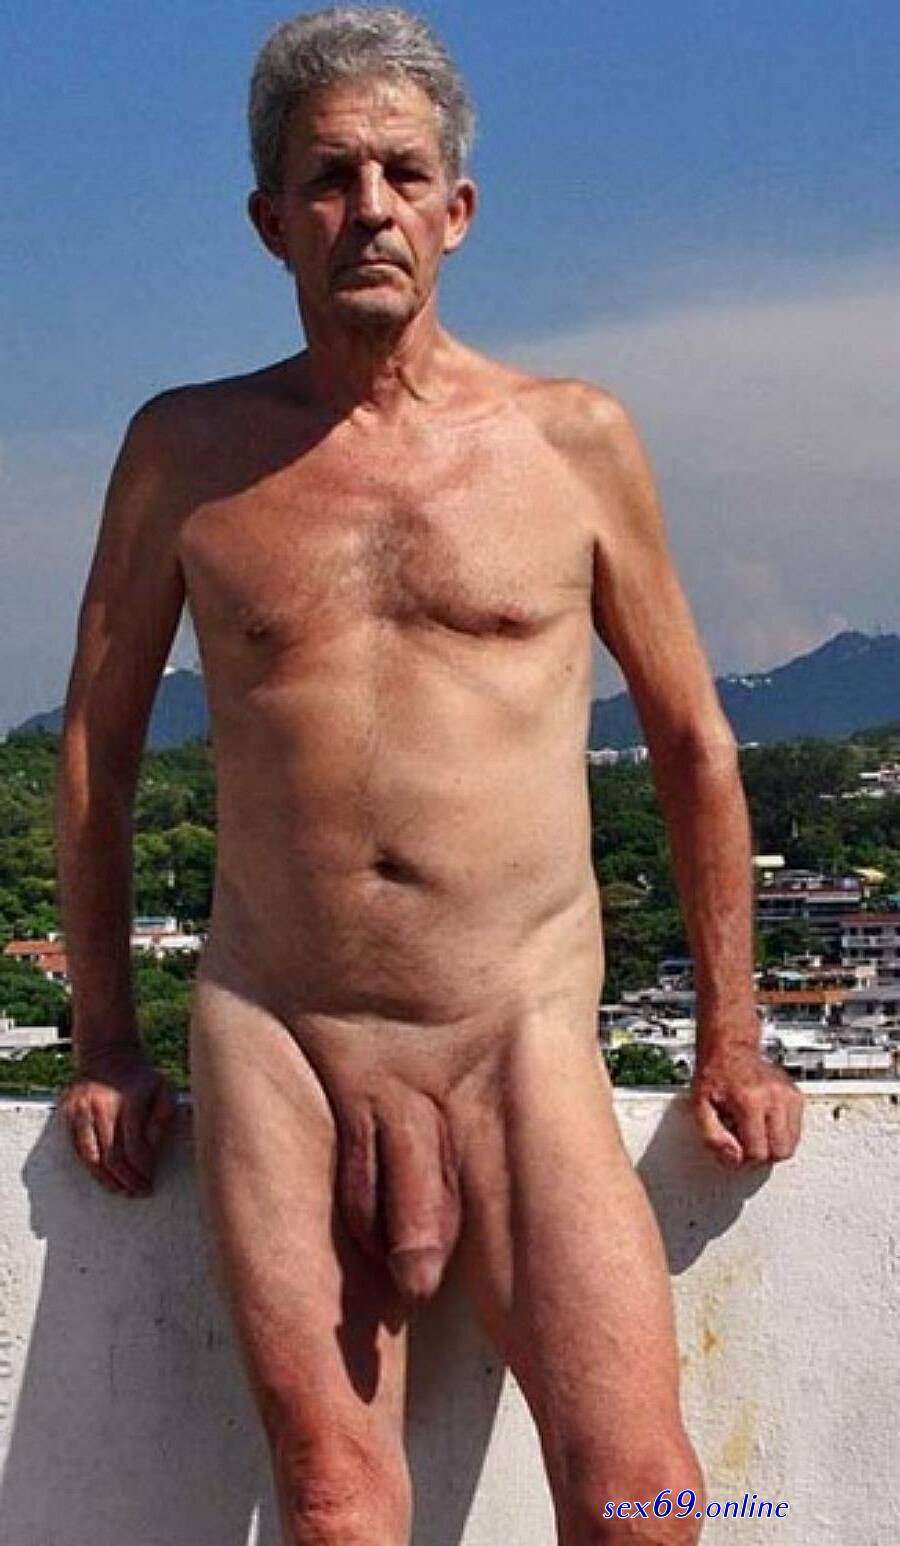 dale mobley share old man huge penis photos